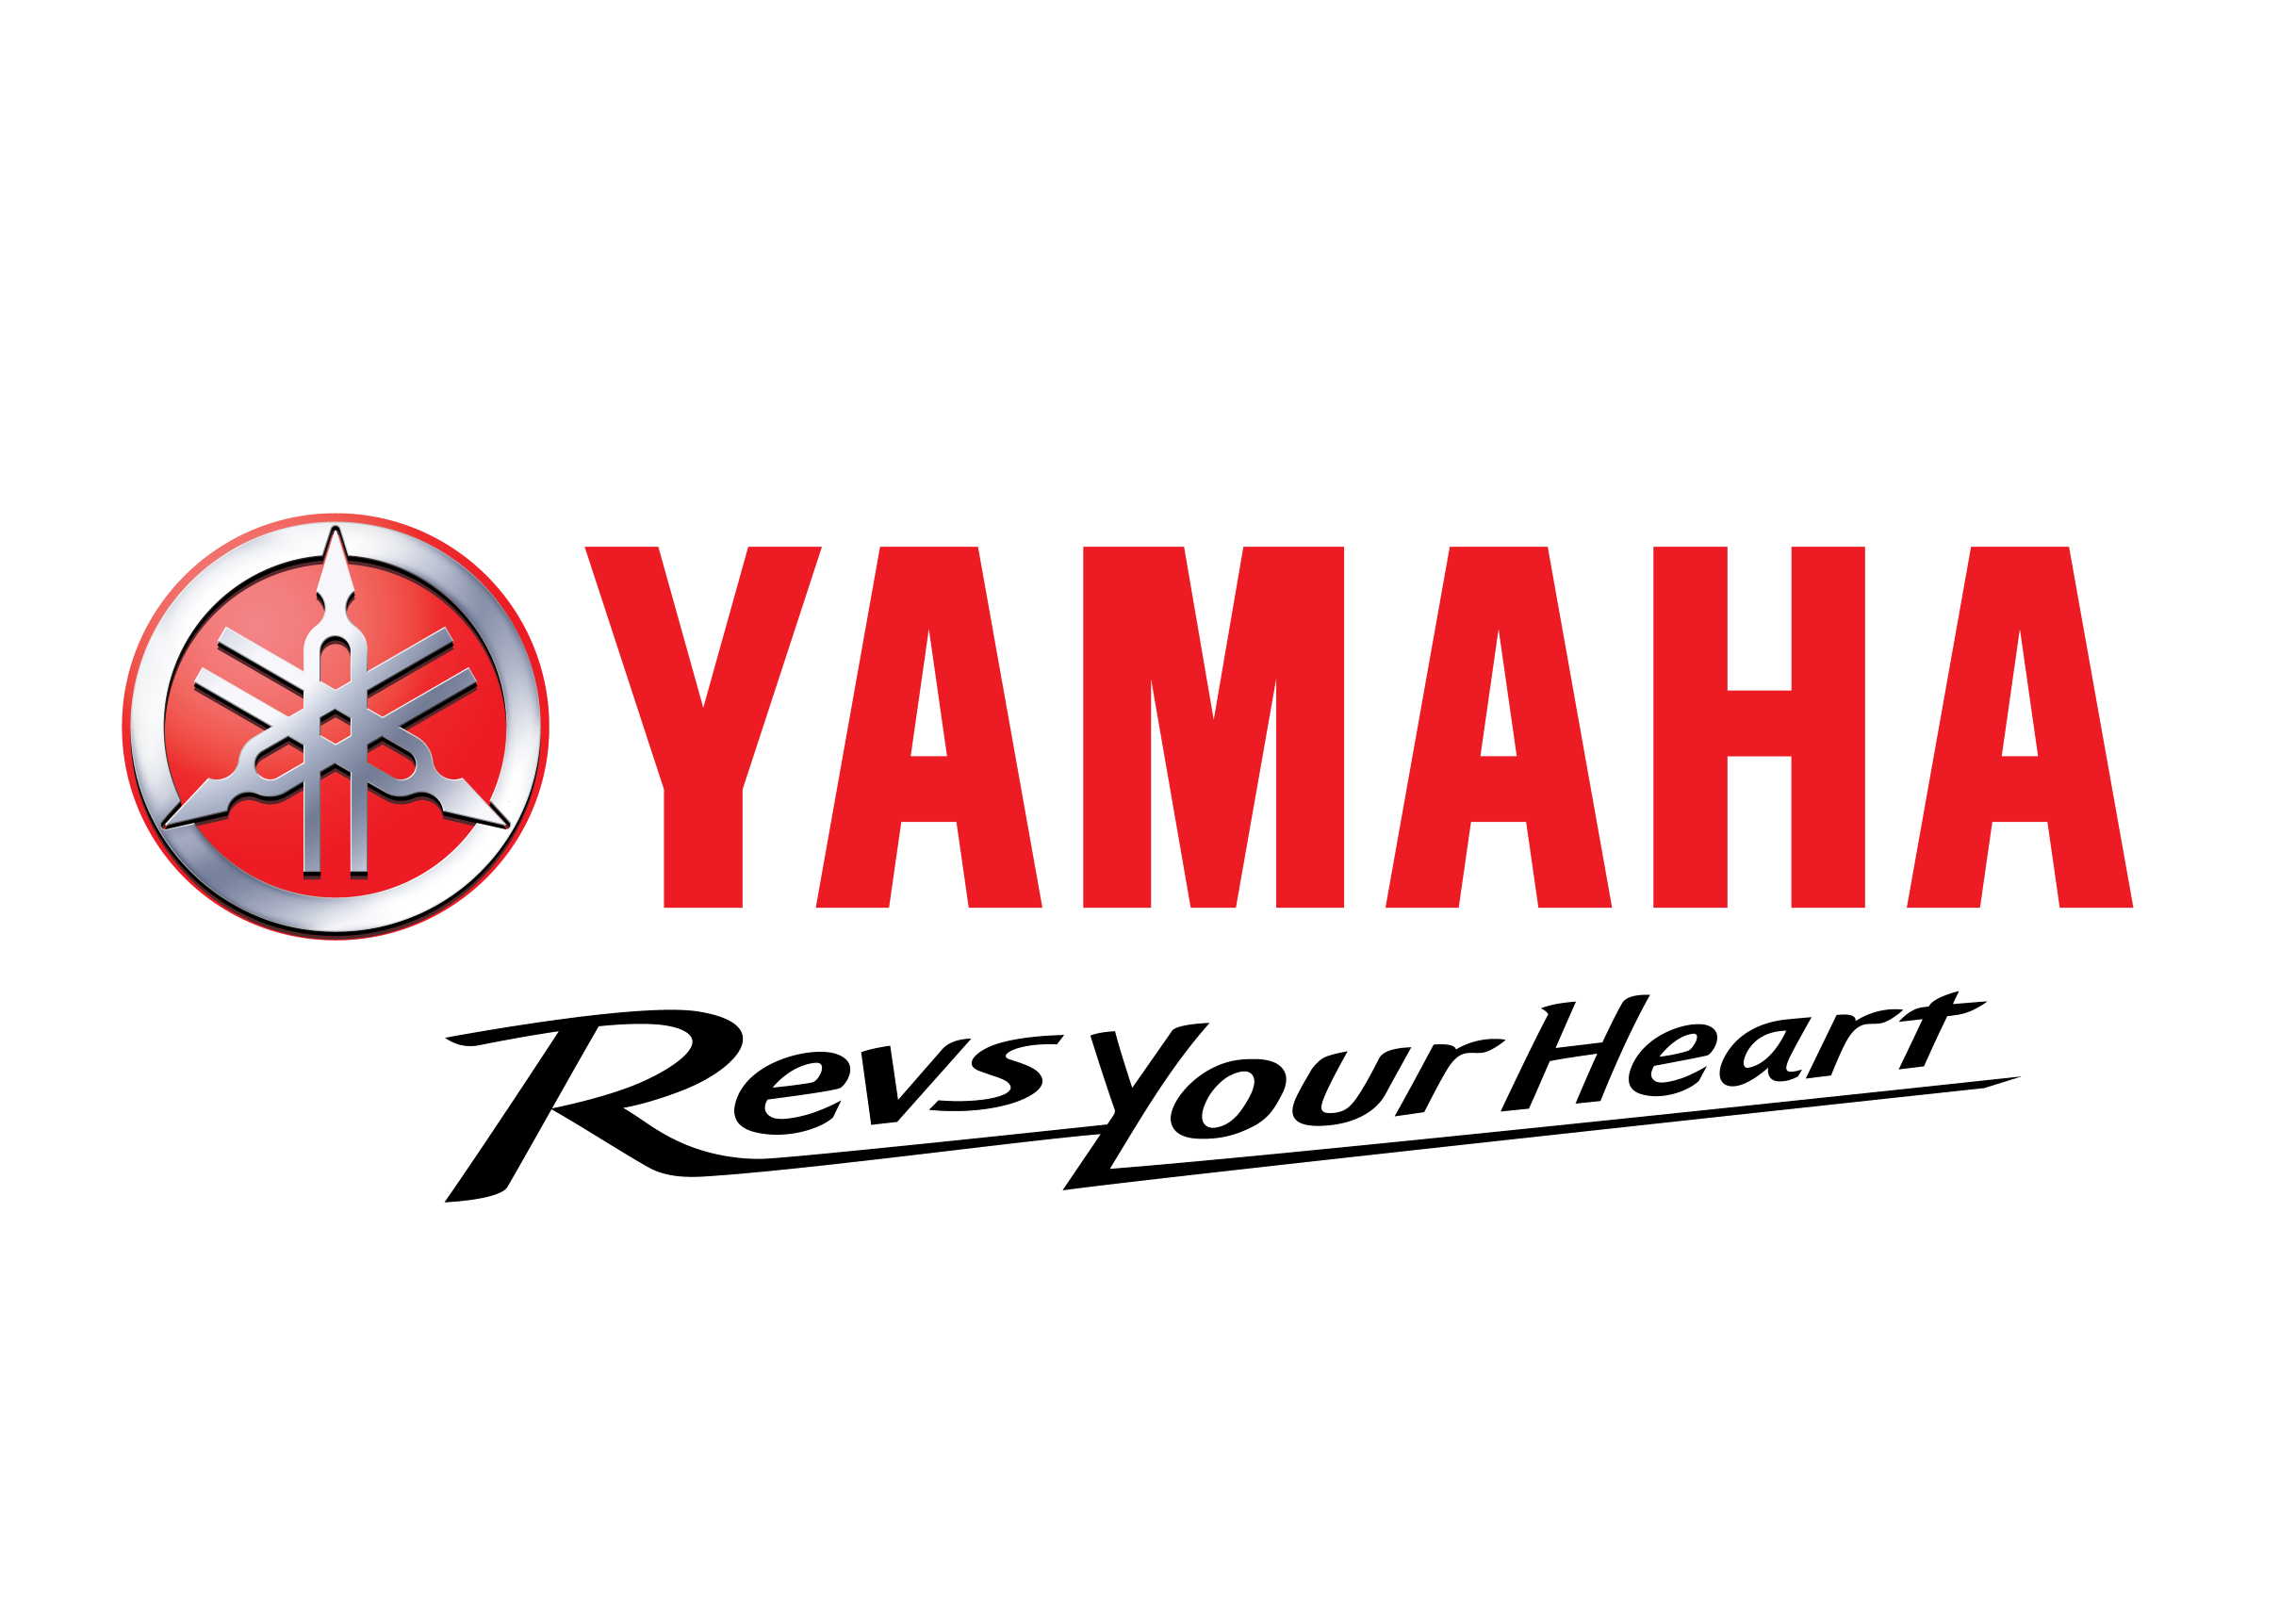 Yamaha Marine Southern Africa